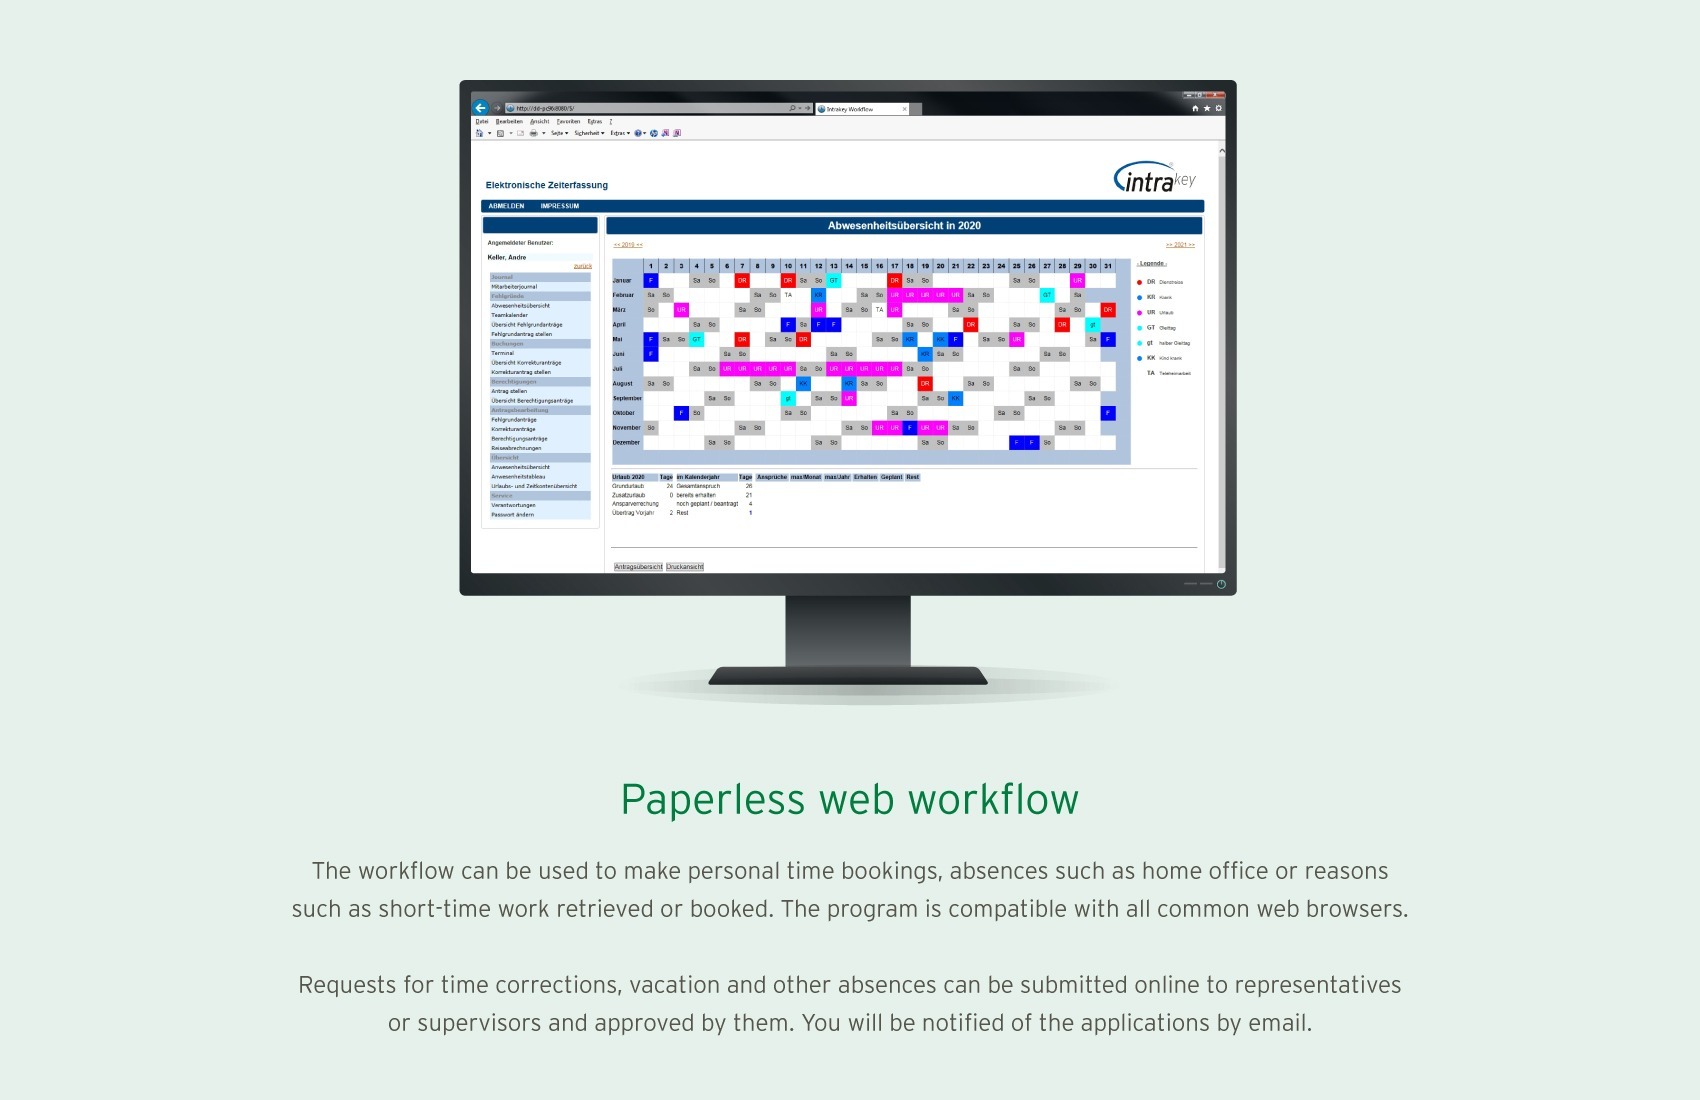 Paperless web workflow